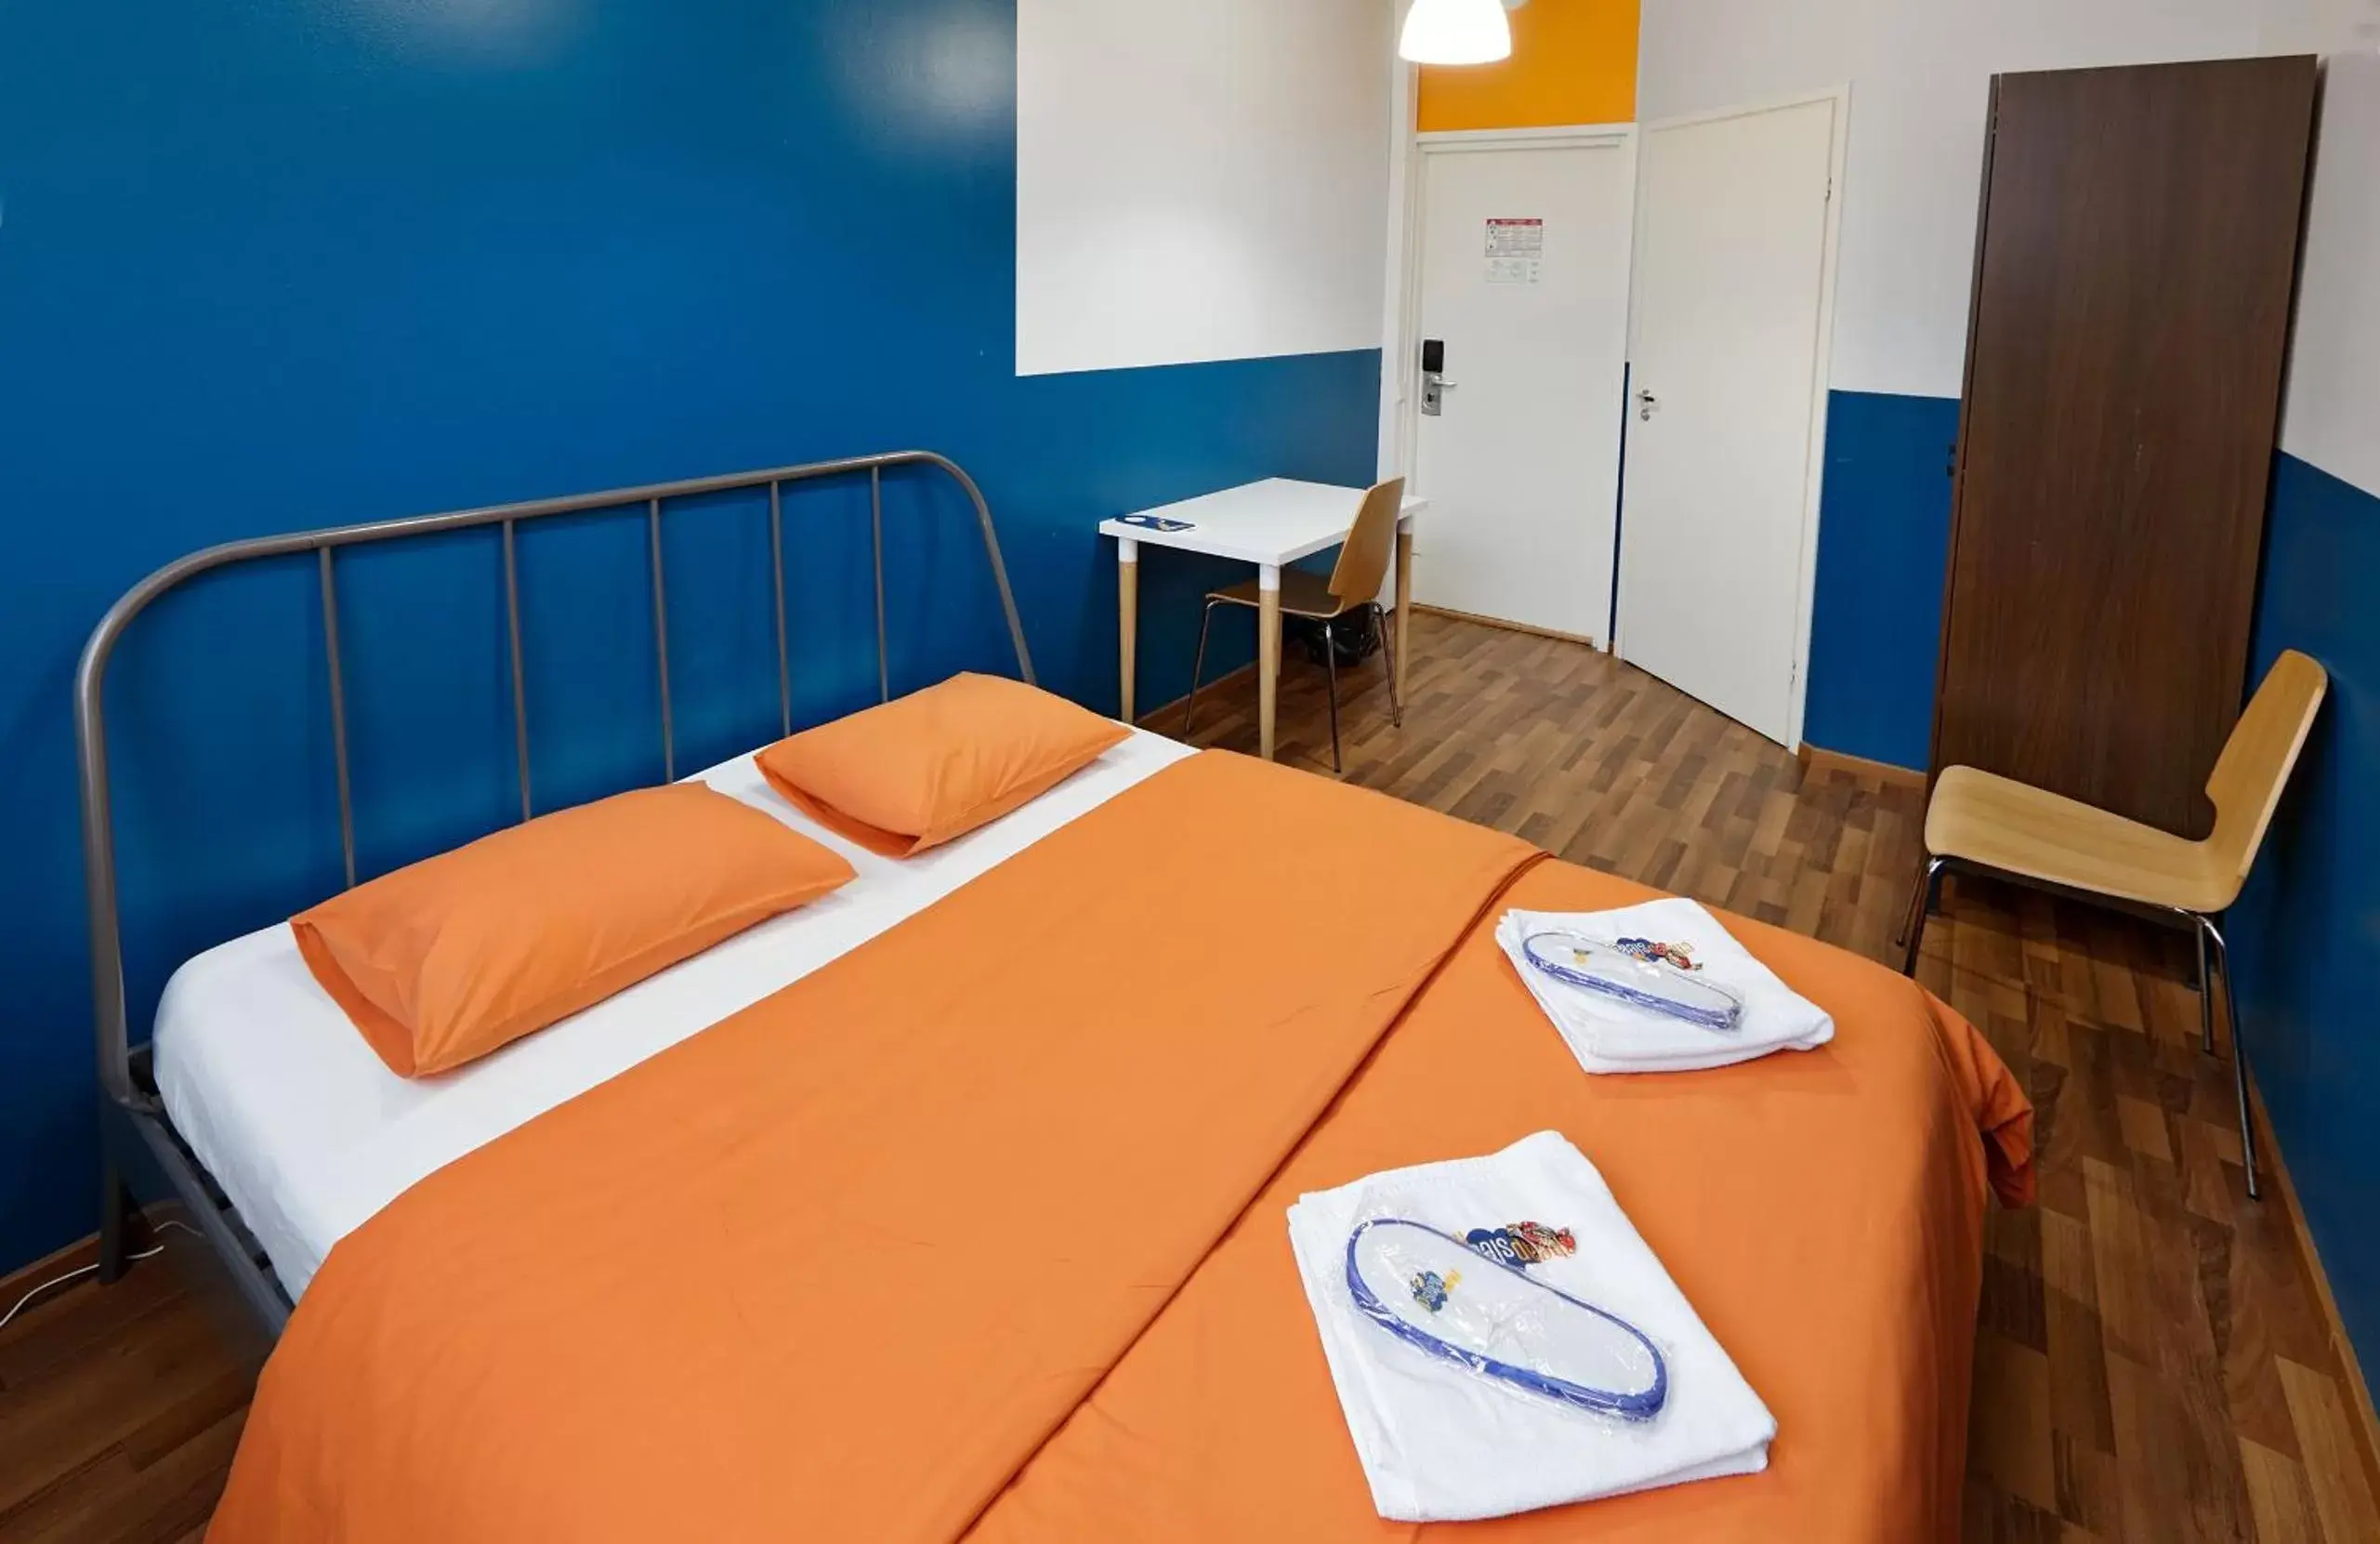 Double Room with Private Bathroom in CheapSleep Hostel Helsinki